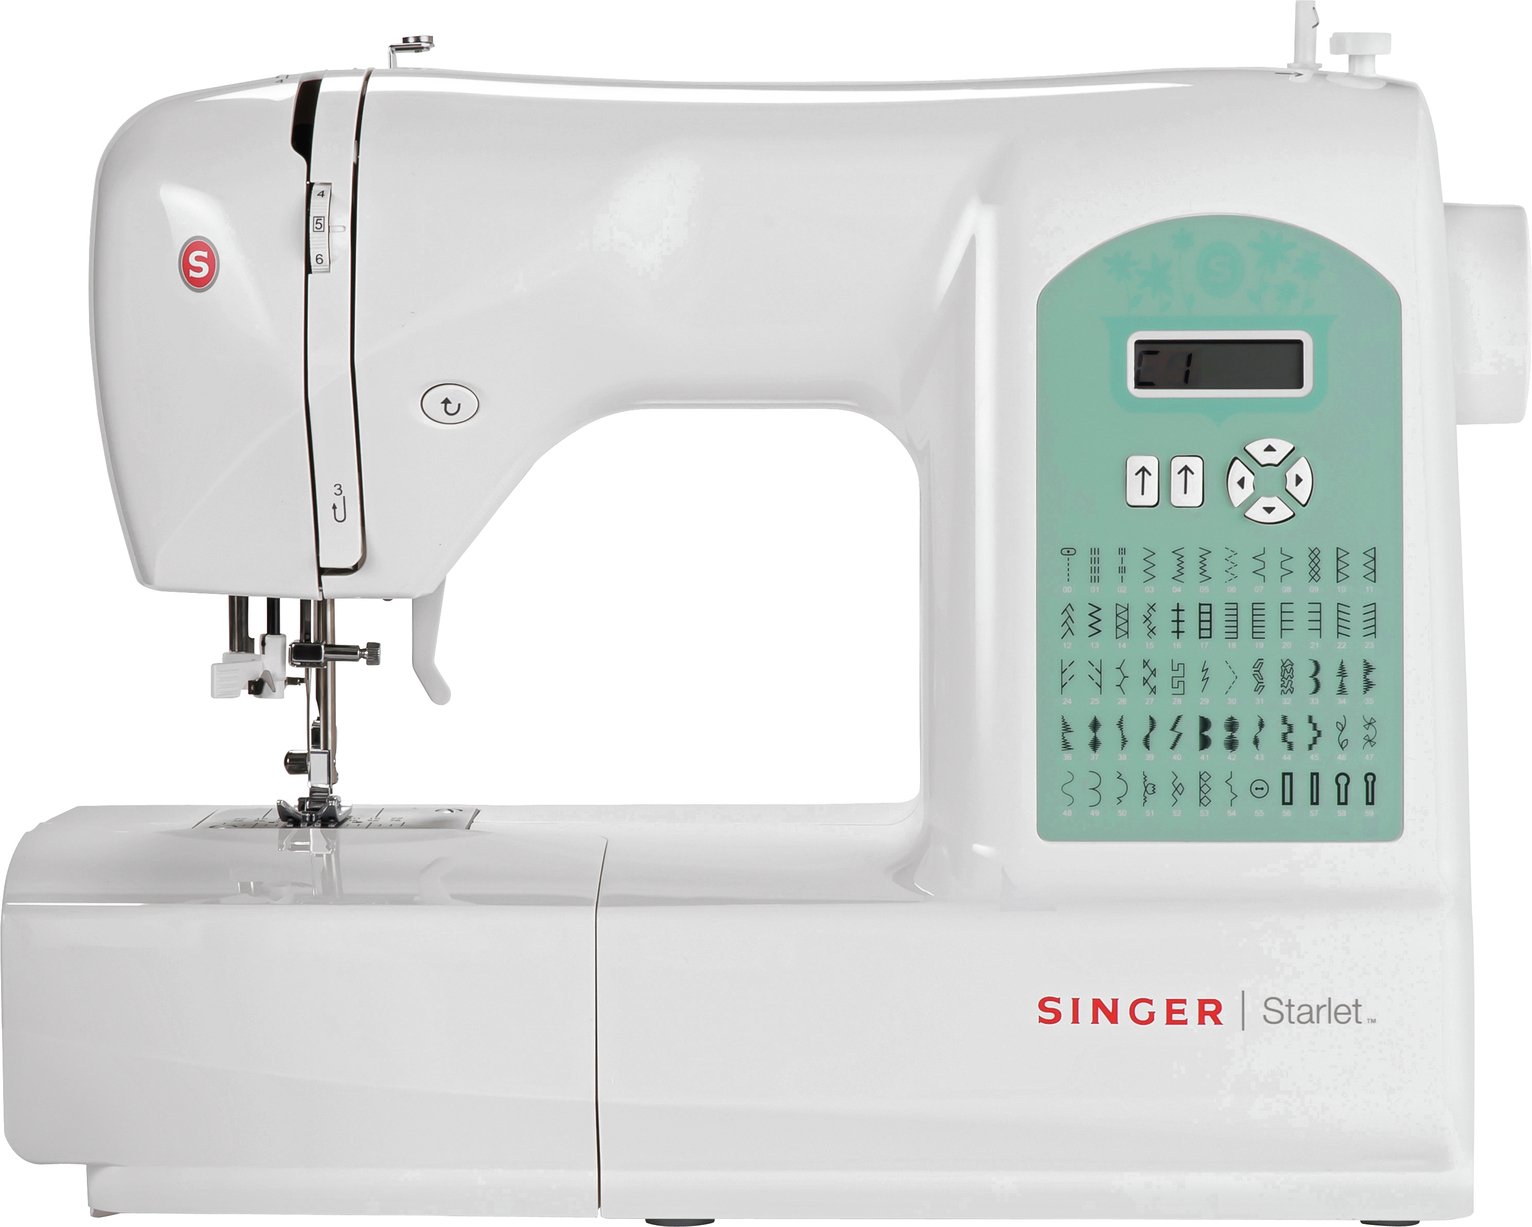 Singer Starlet 6660 Computerised Sewing Machine